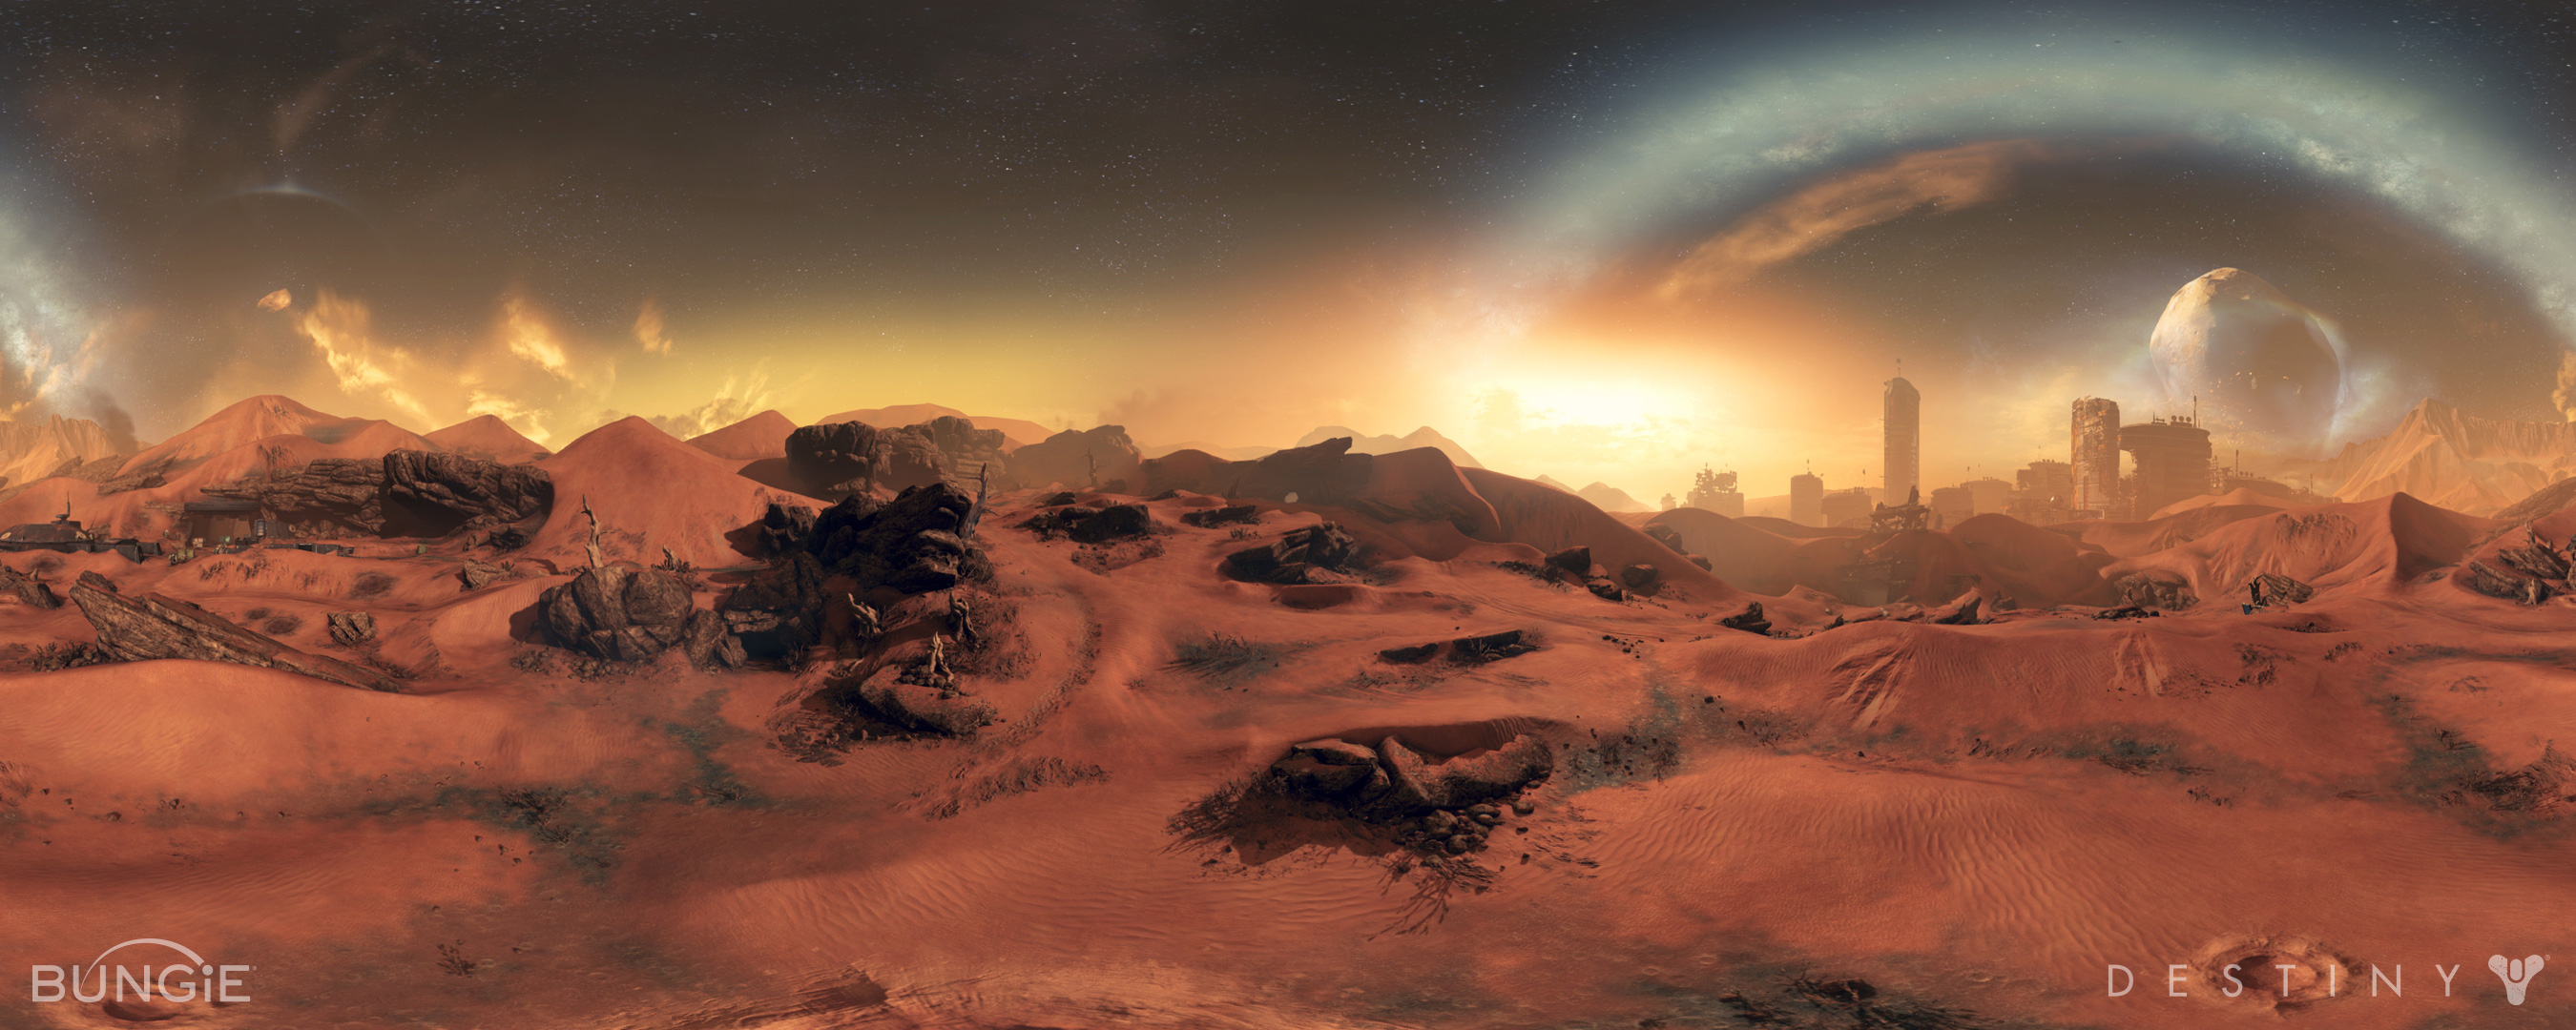 destiny-panorama-screenshot-5.jpg